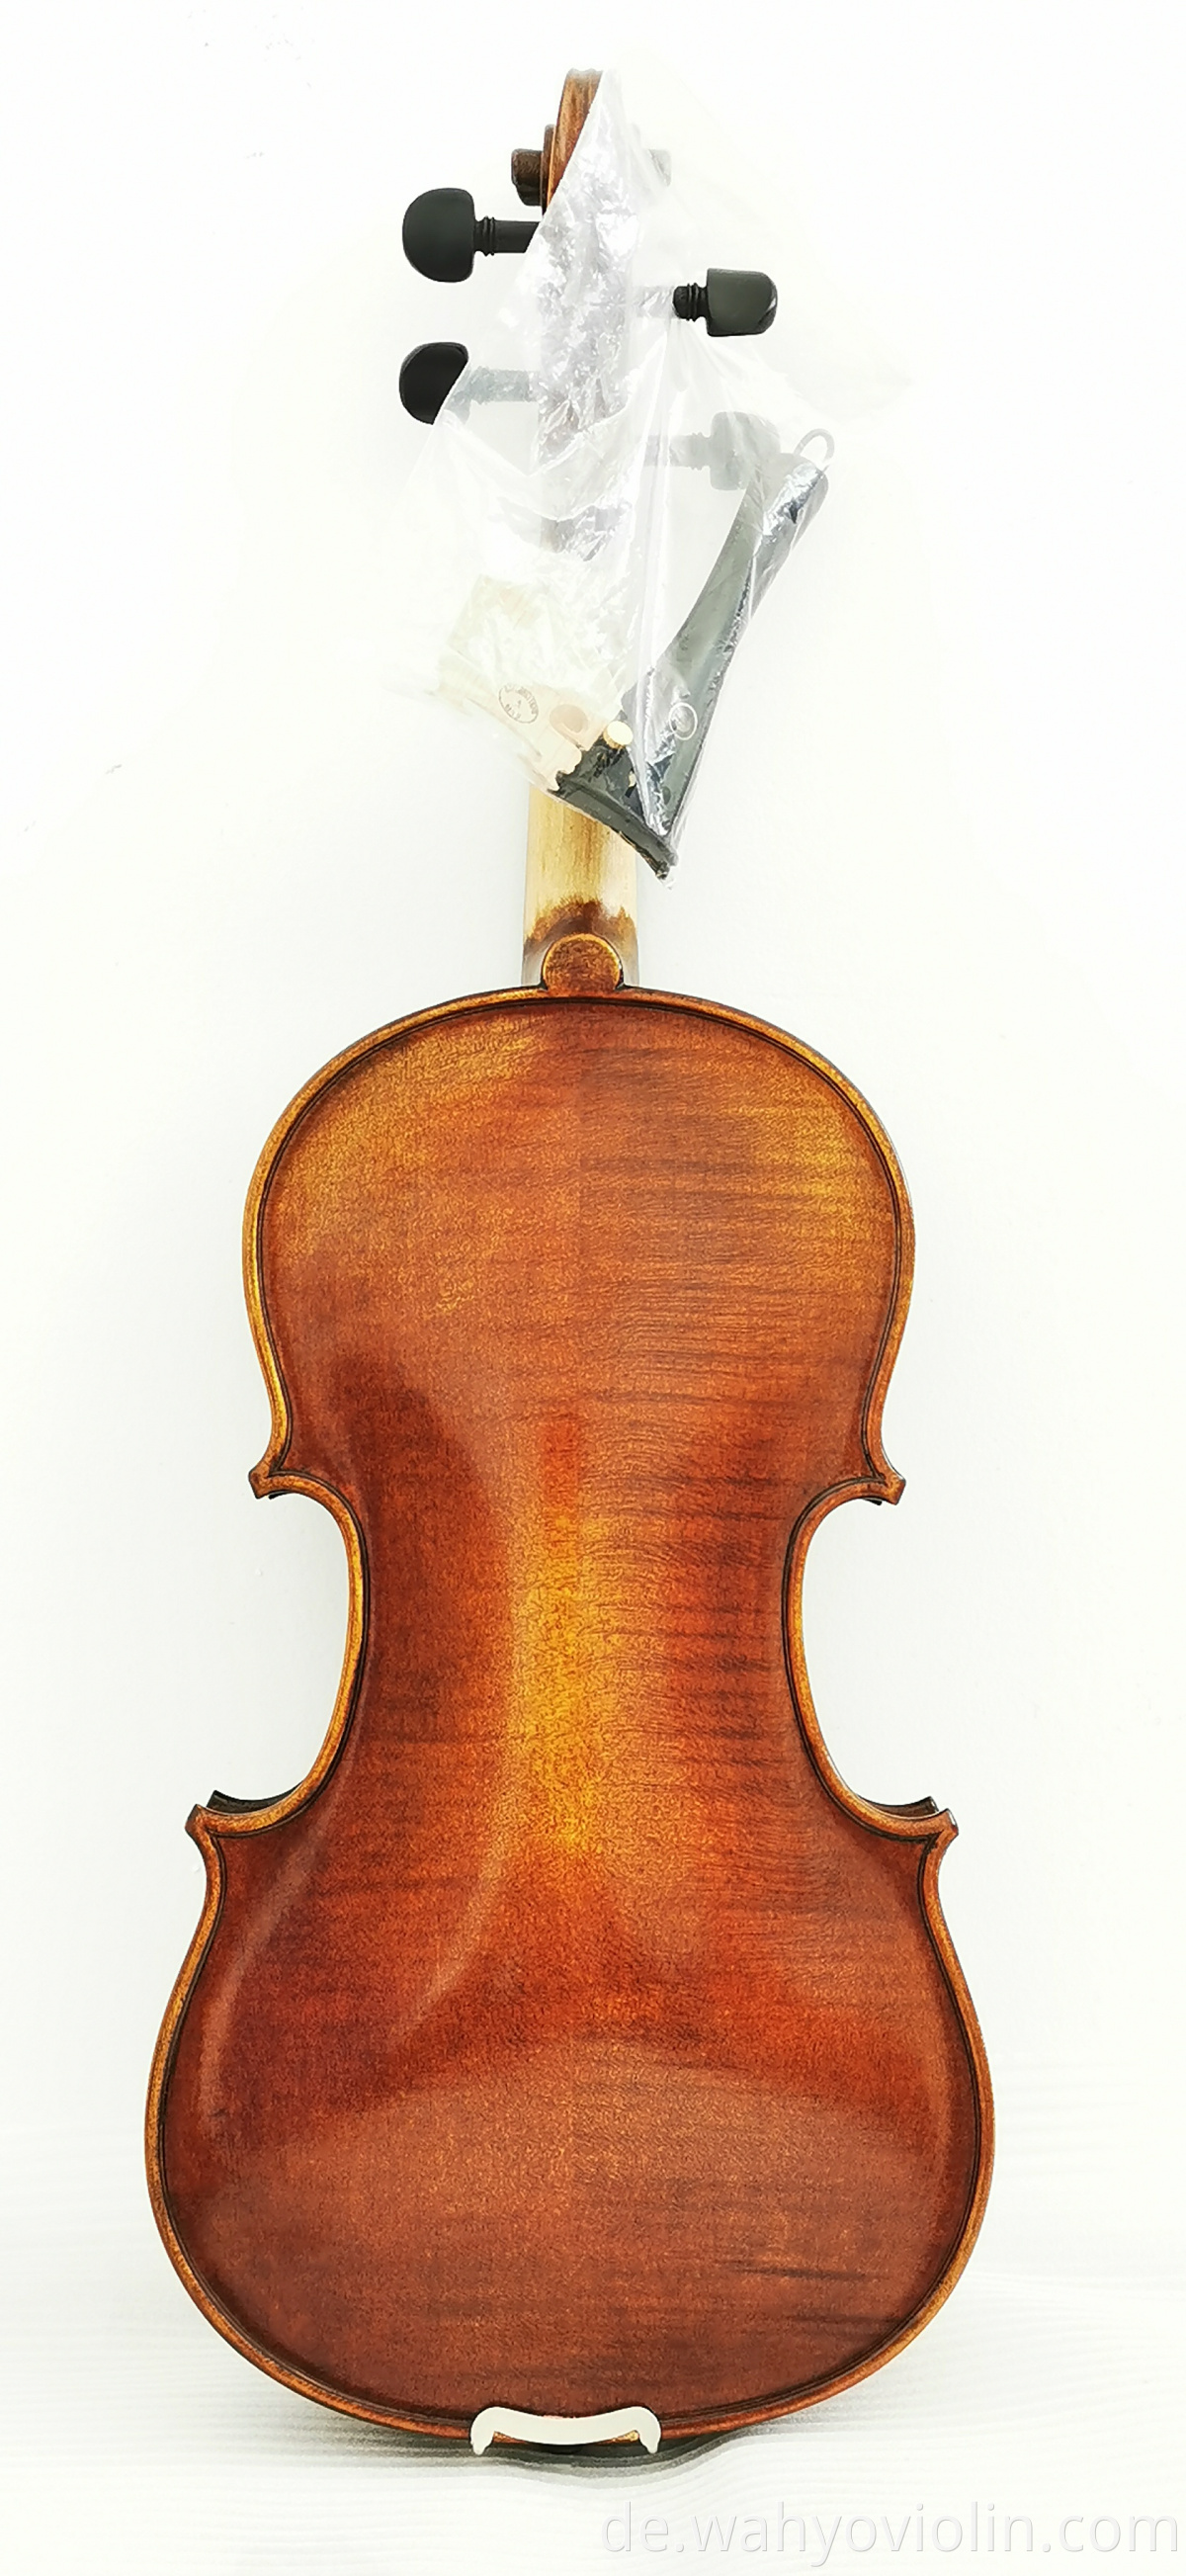 ViolinB JM-VAB-1-2